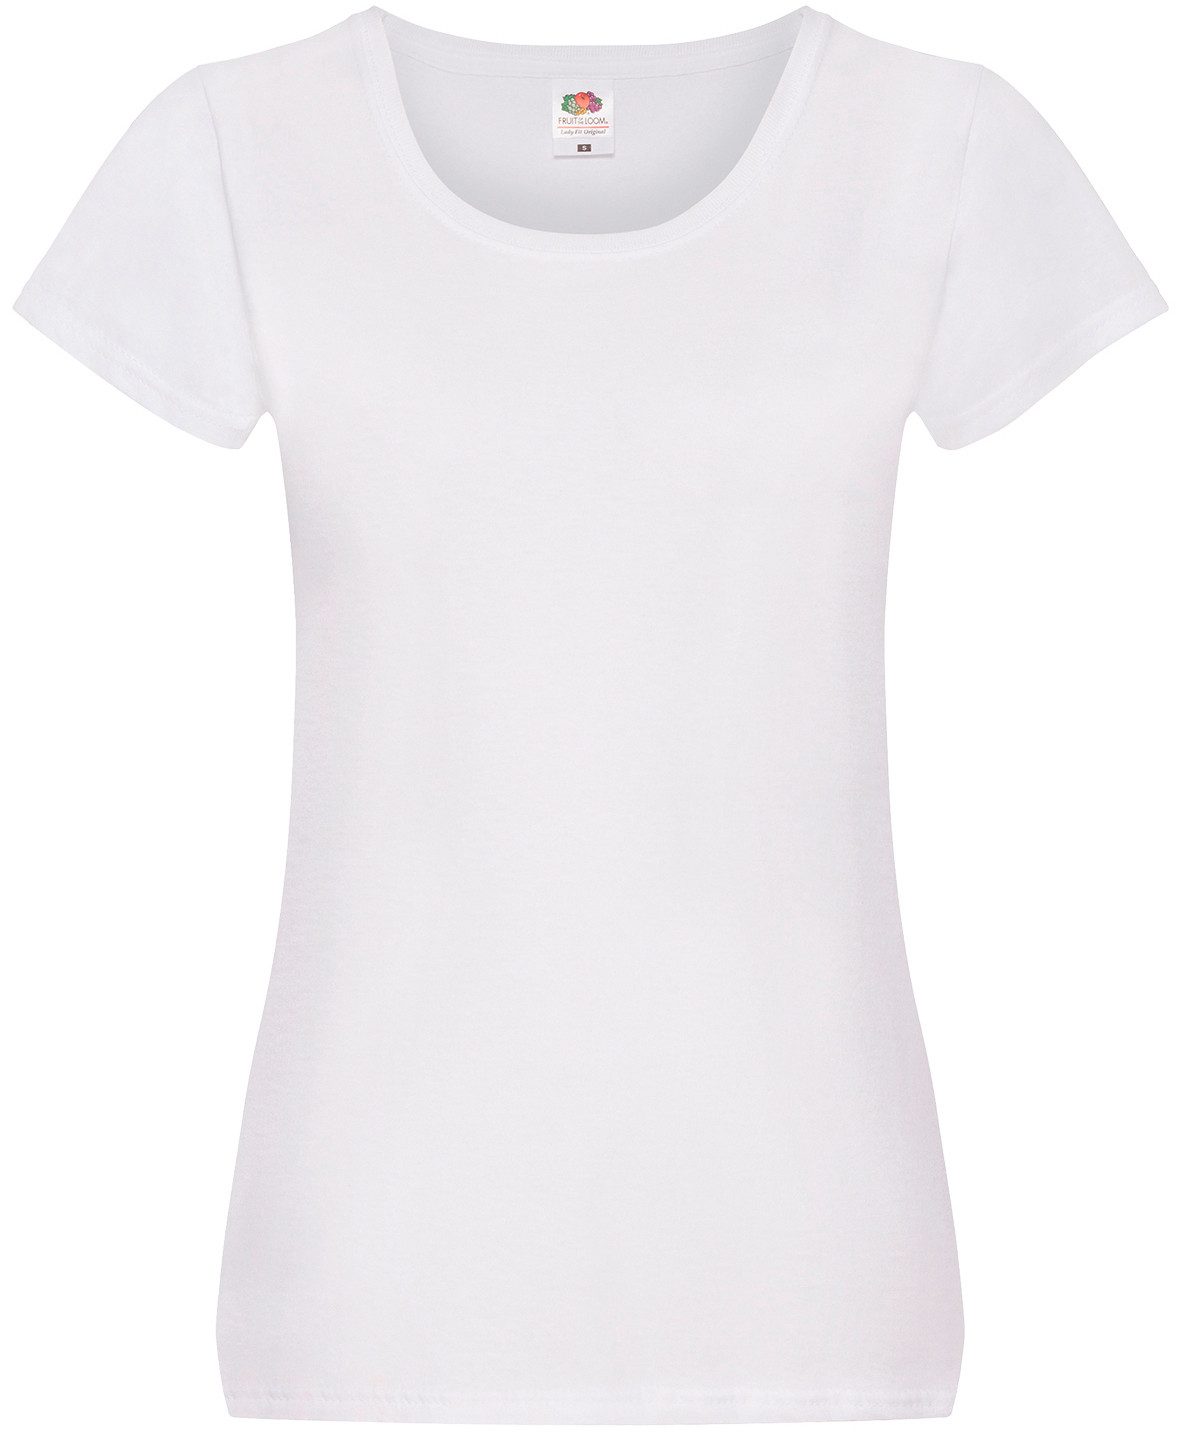 TEXXILLA T-Shirt Damen T-Shirt Weiß